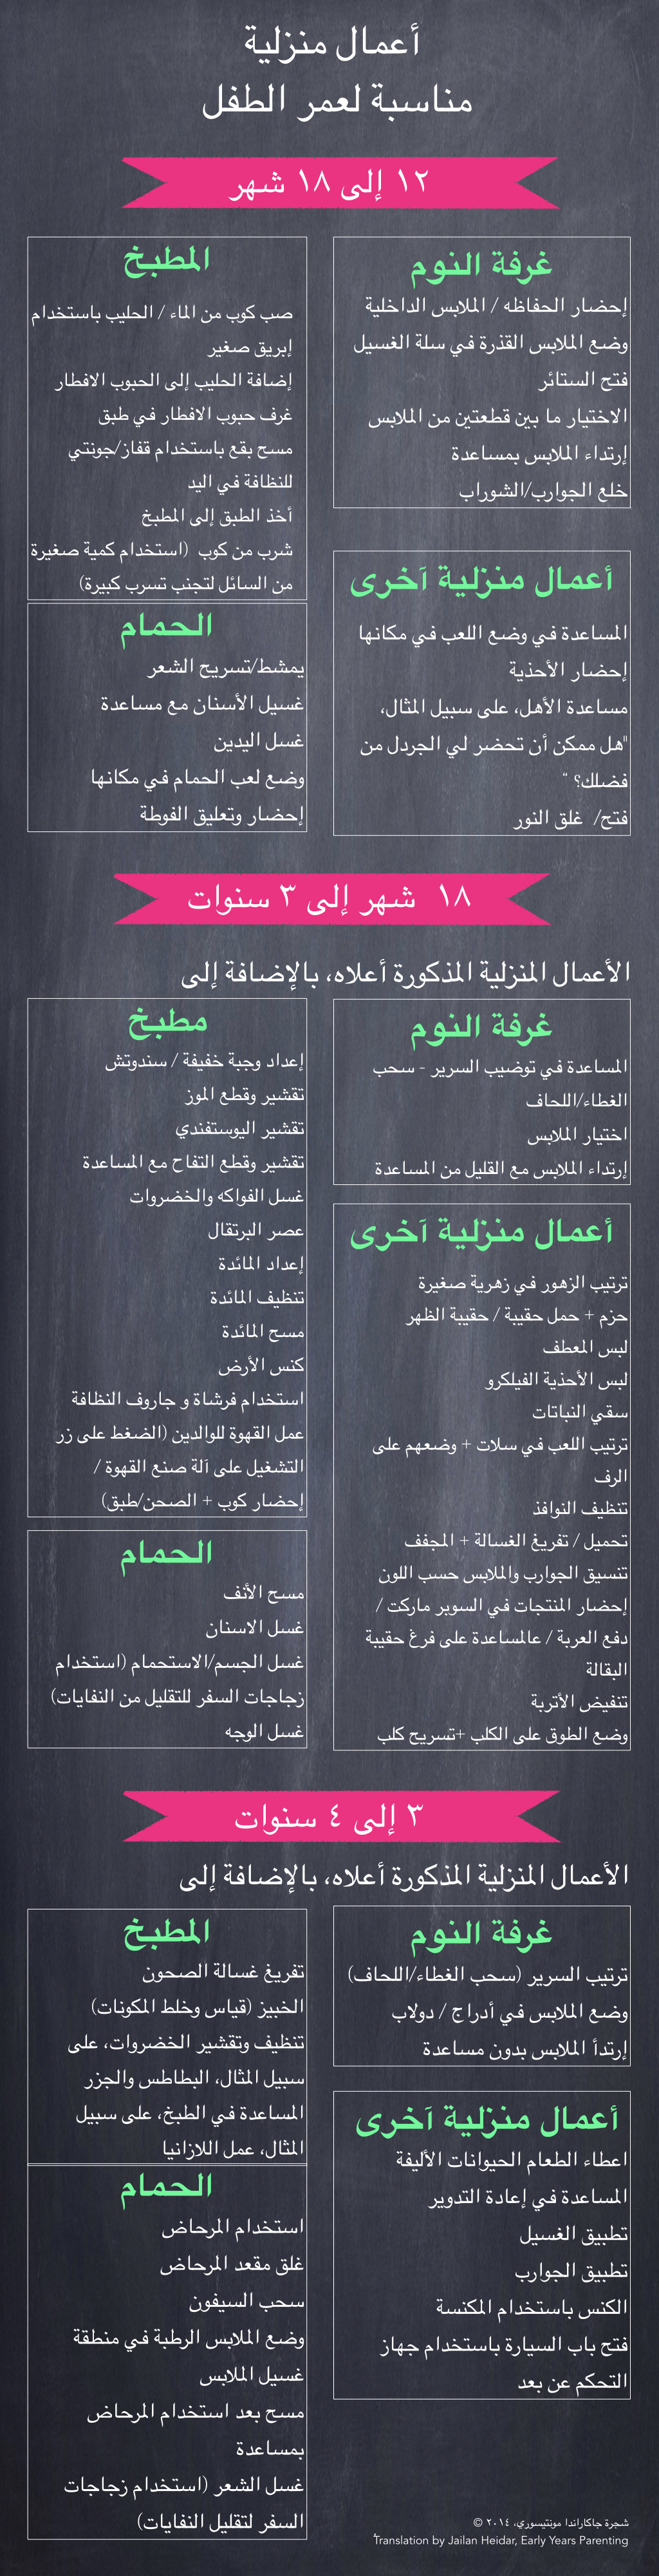 chores infographic - arabic